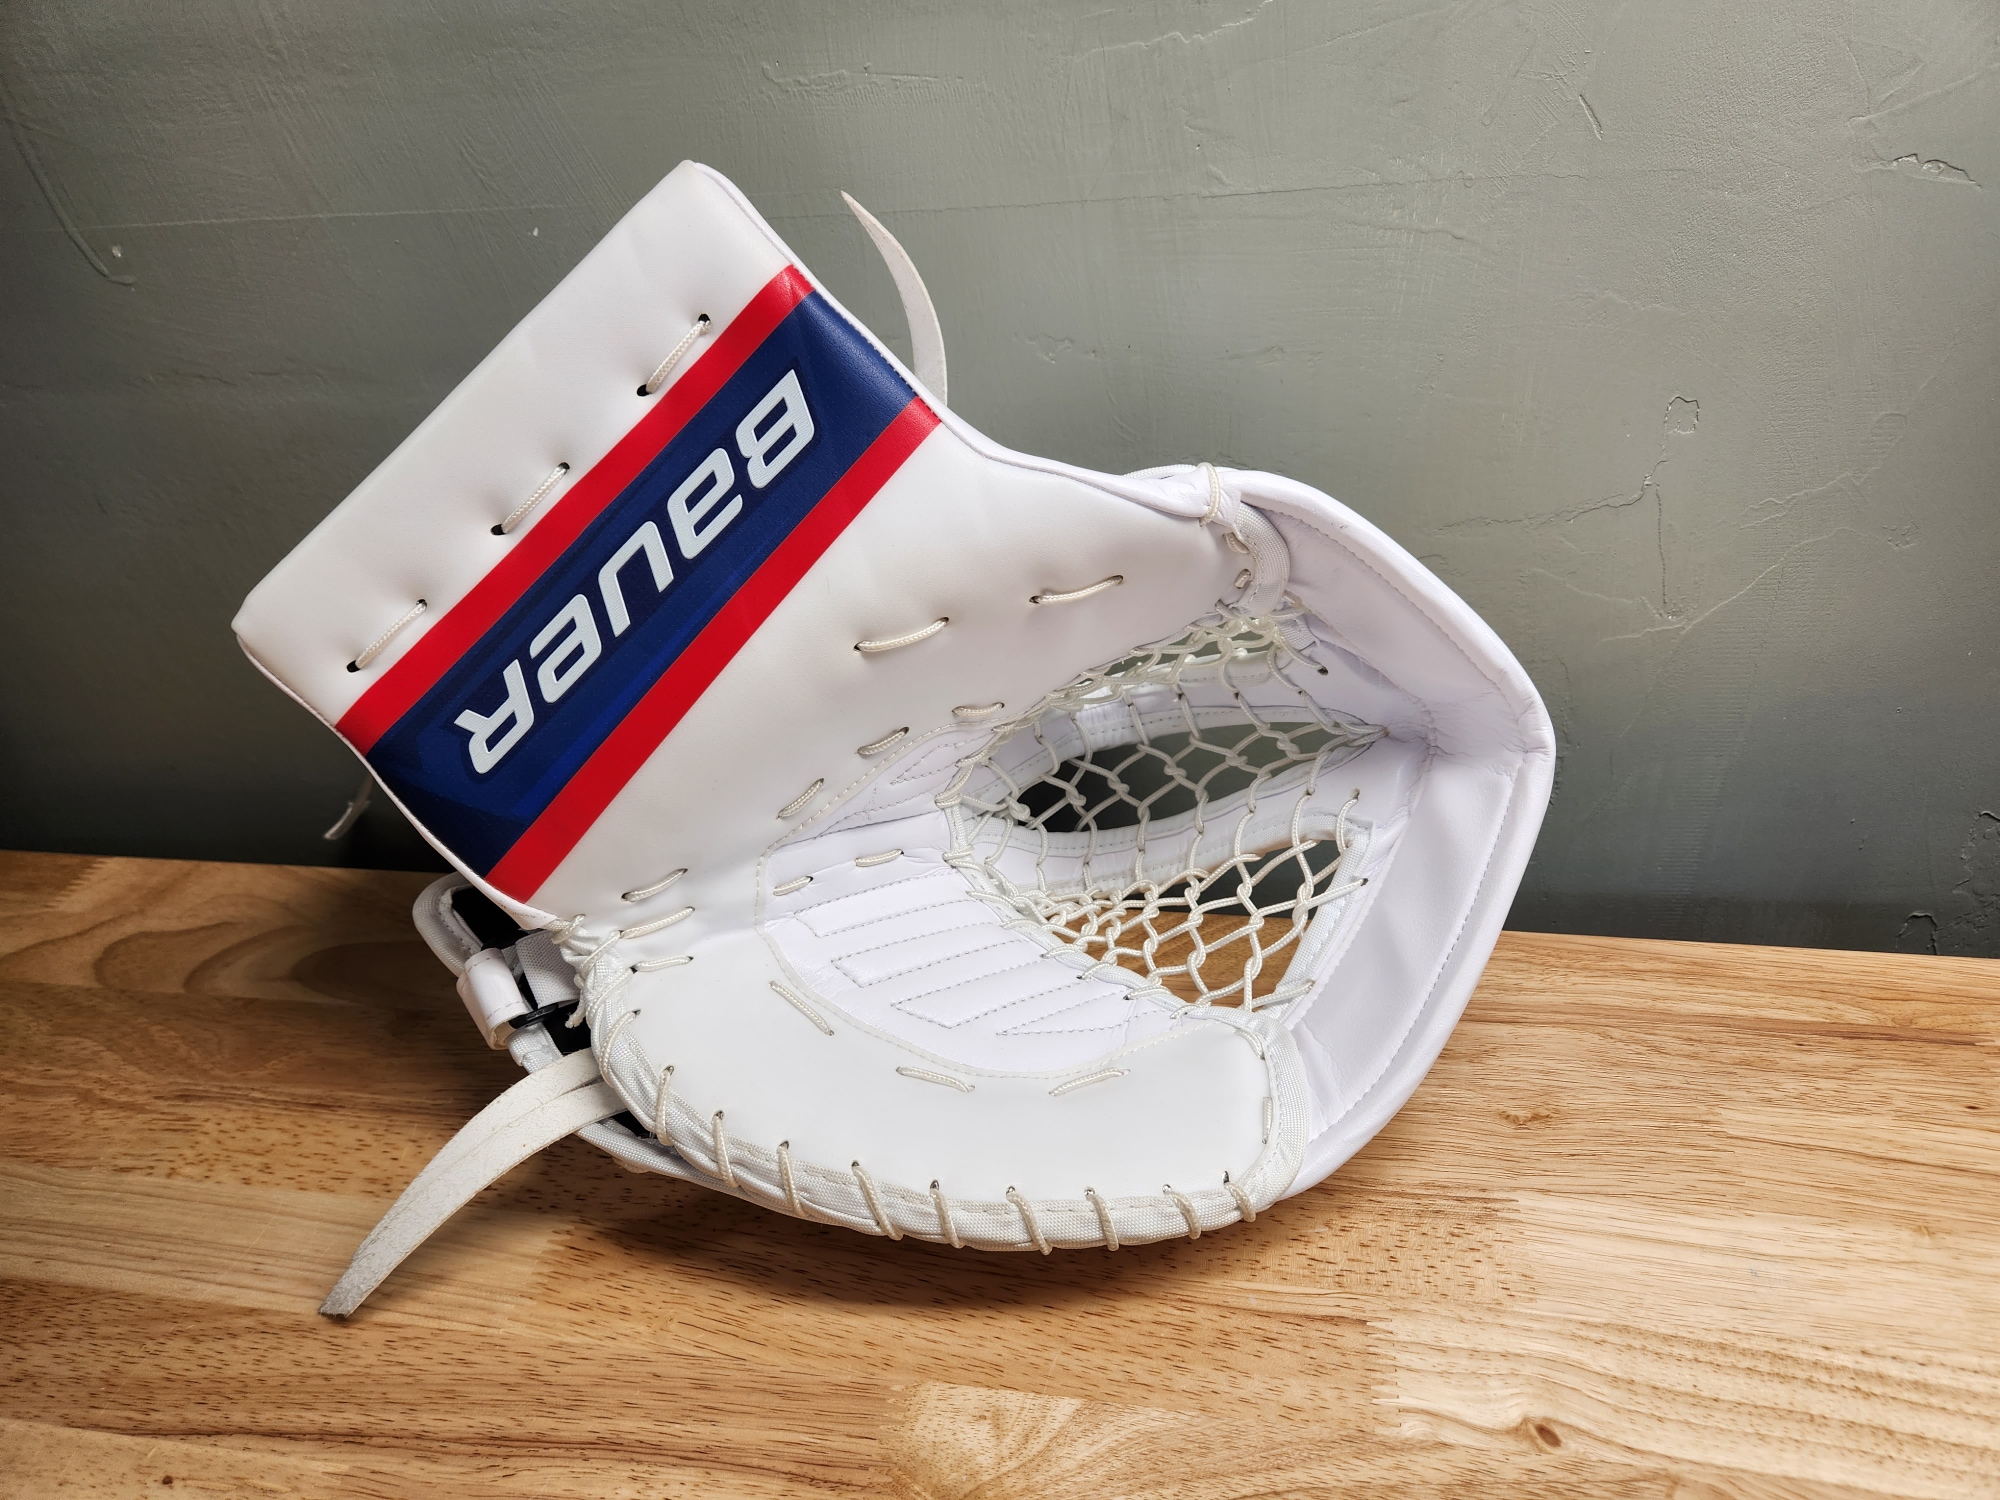 NHL Habs Bauer Supreme Pro Stock Glove